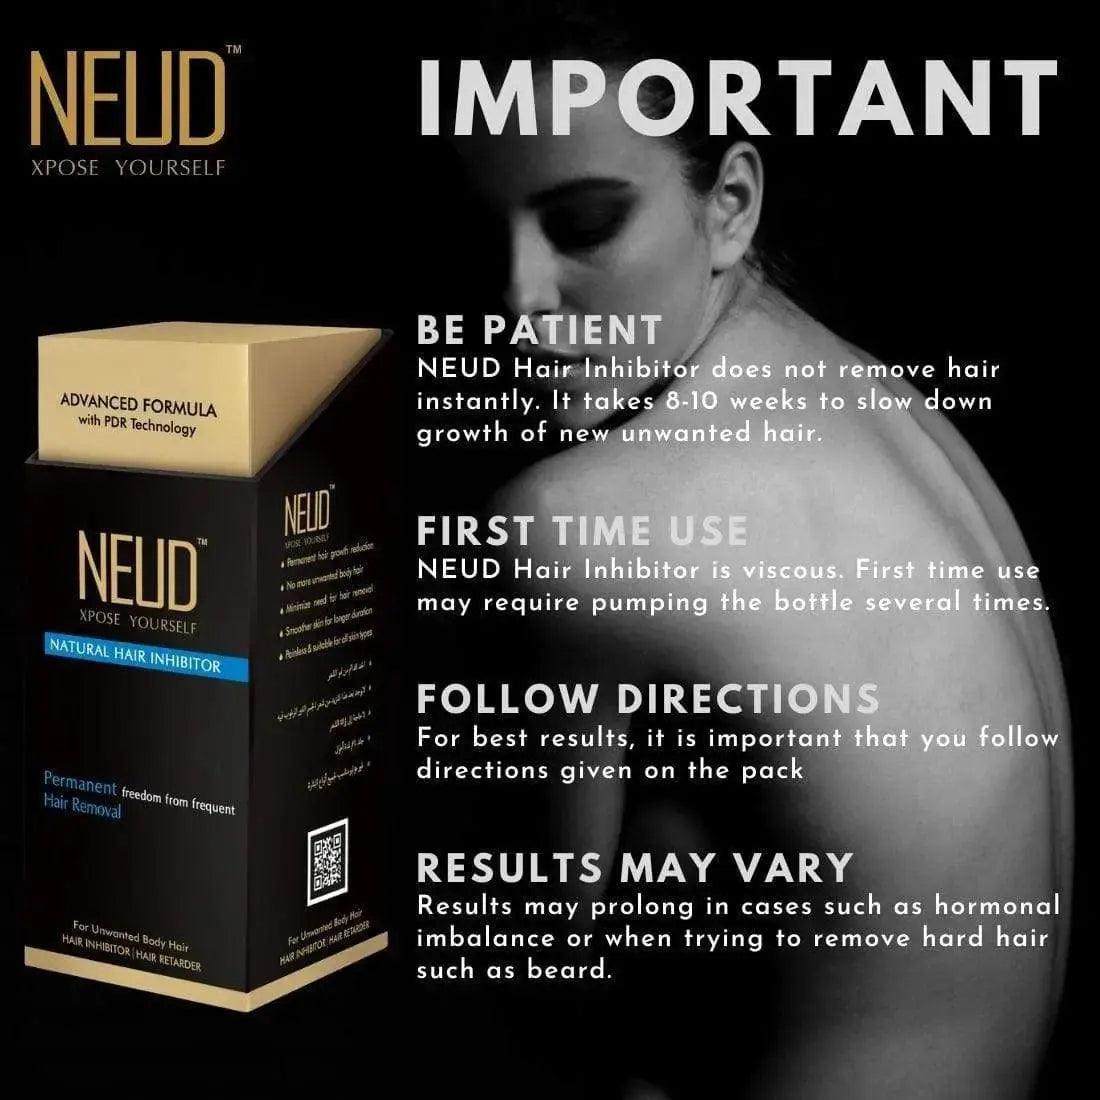 NEUD Natural Hair Inhibitor Lotion for Men & Women - 80g